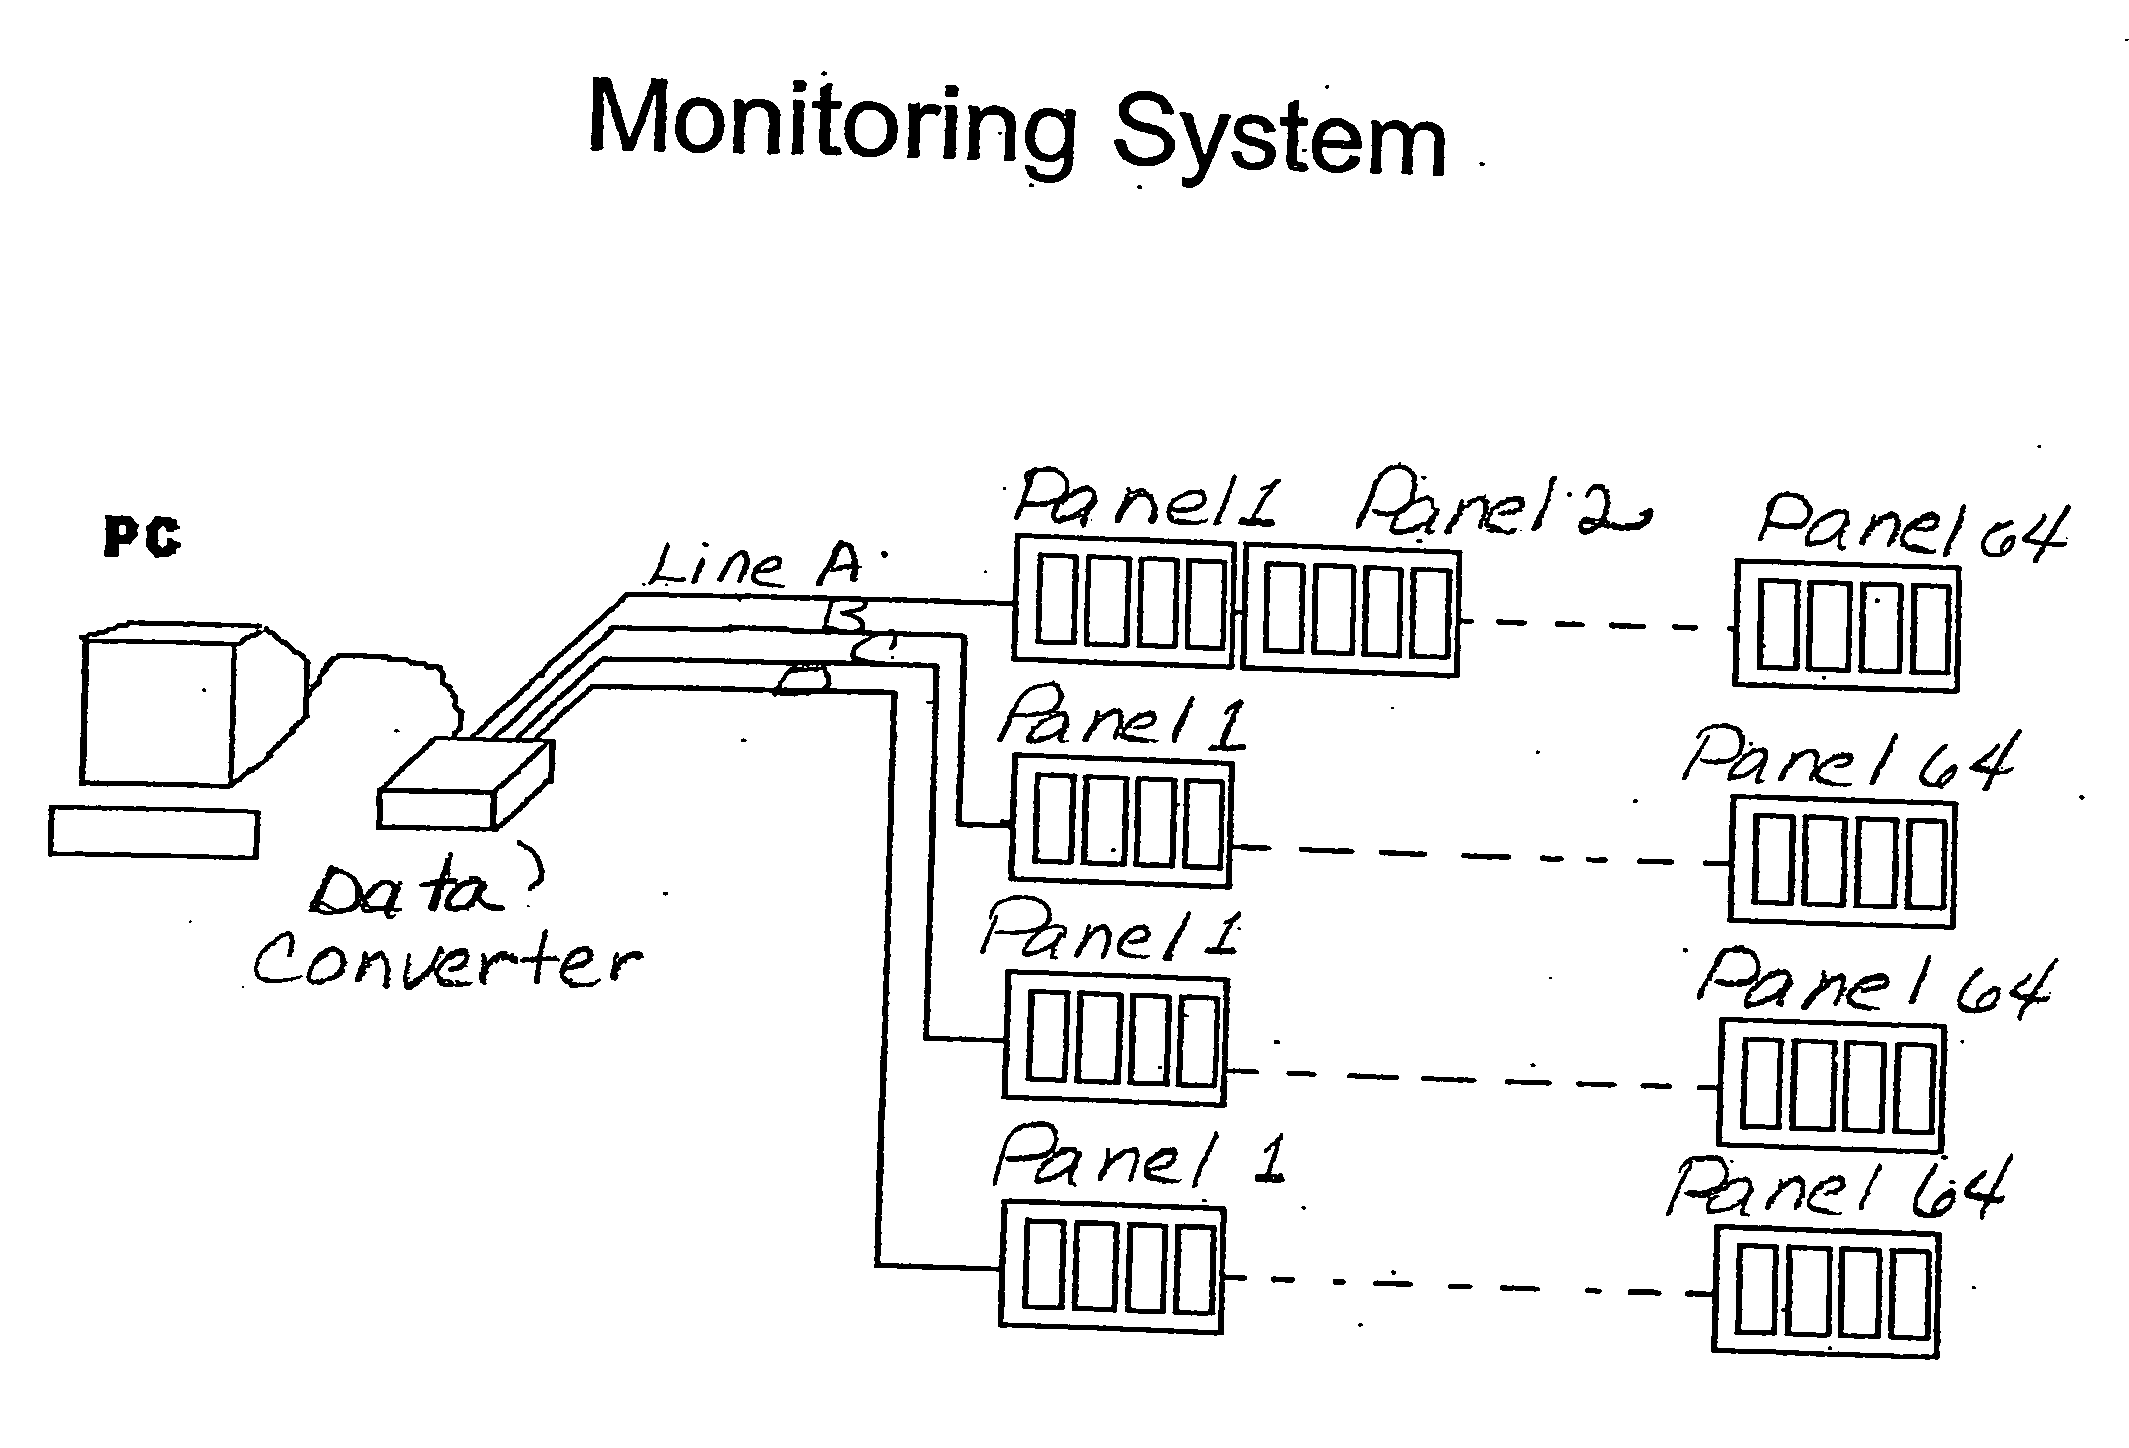 Monitoring system